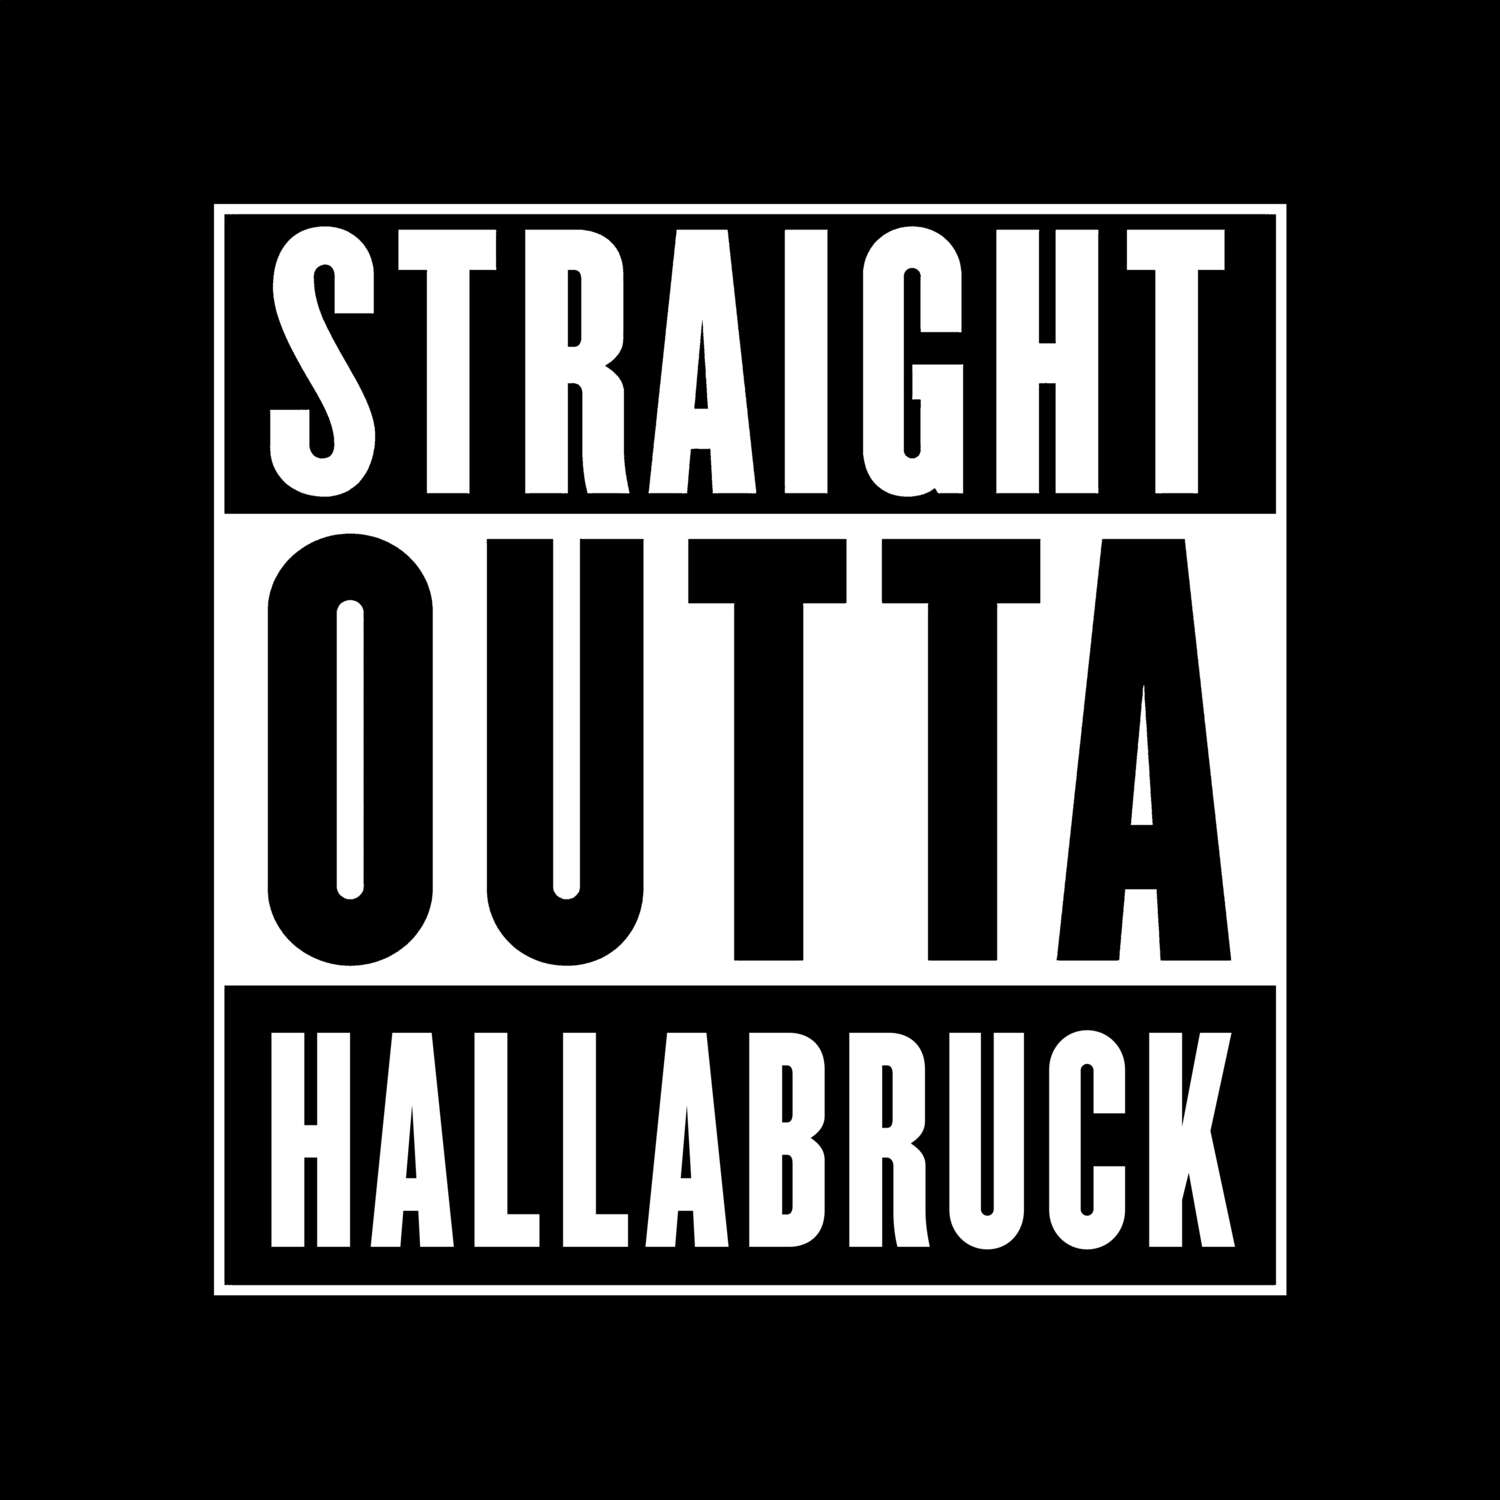 Hallabruck T-Shirt »Straight Outta«